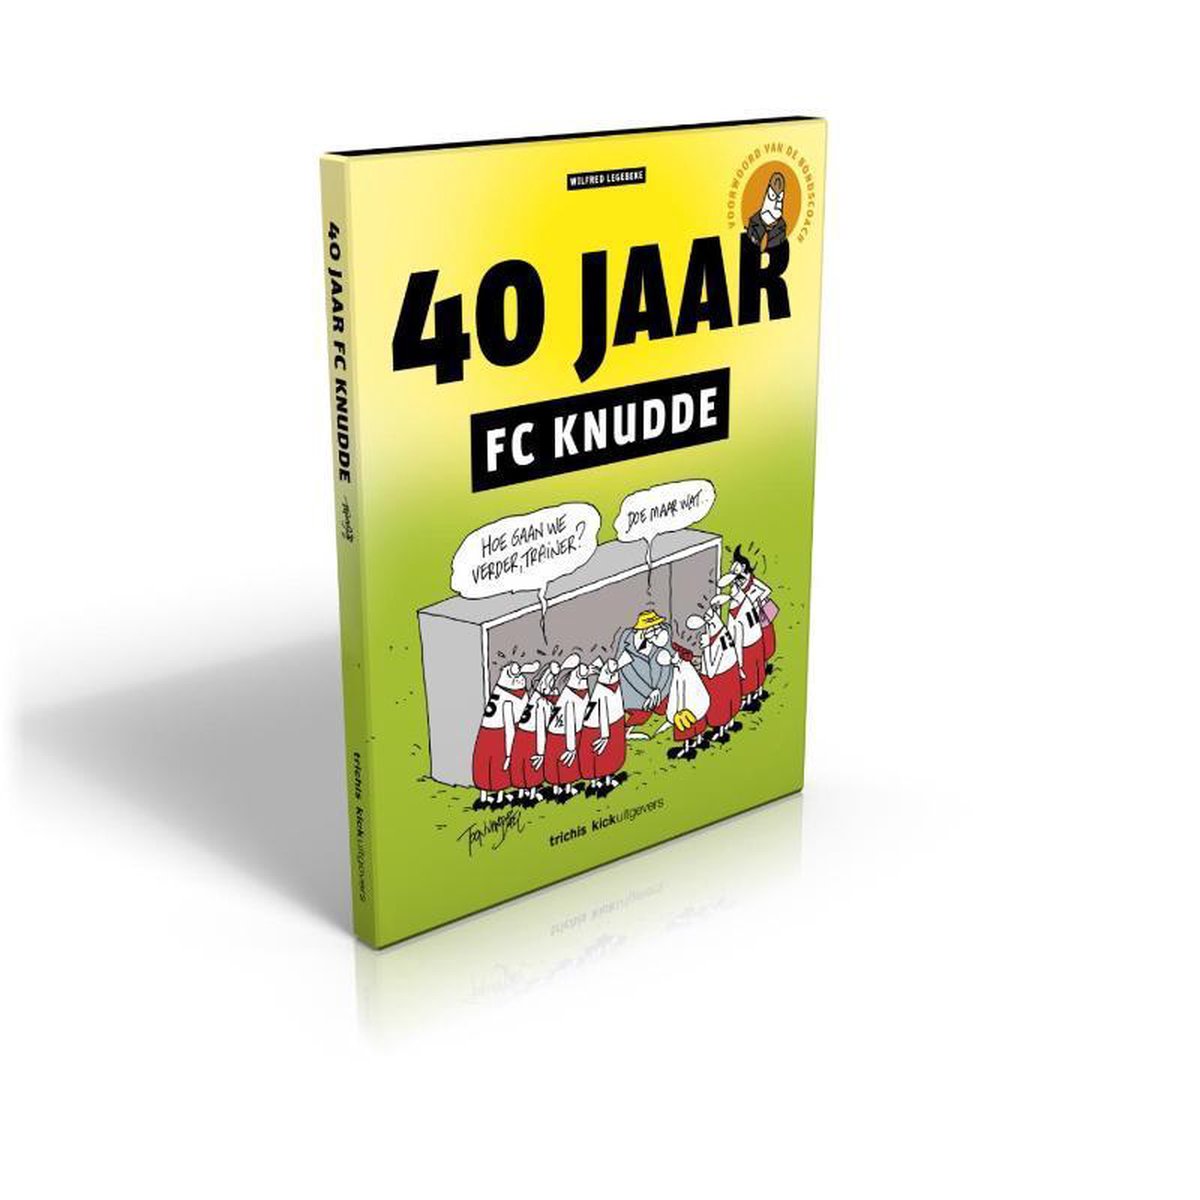 Fc knudde  -   40 jaar FC Knudde